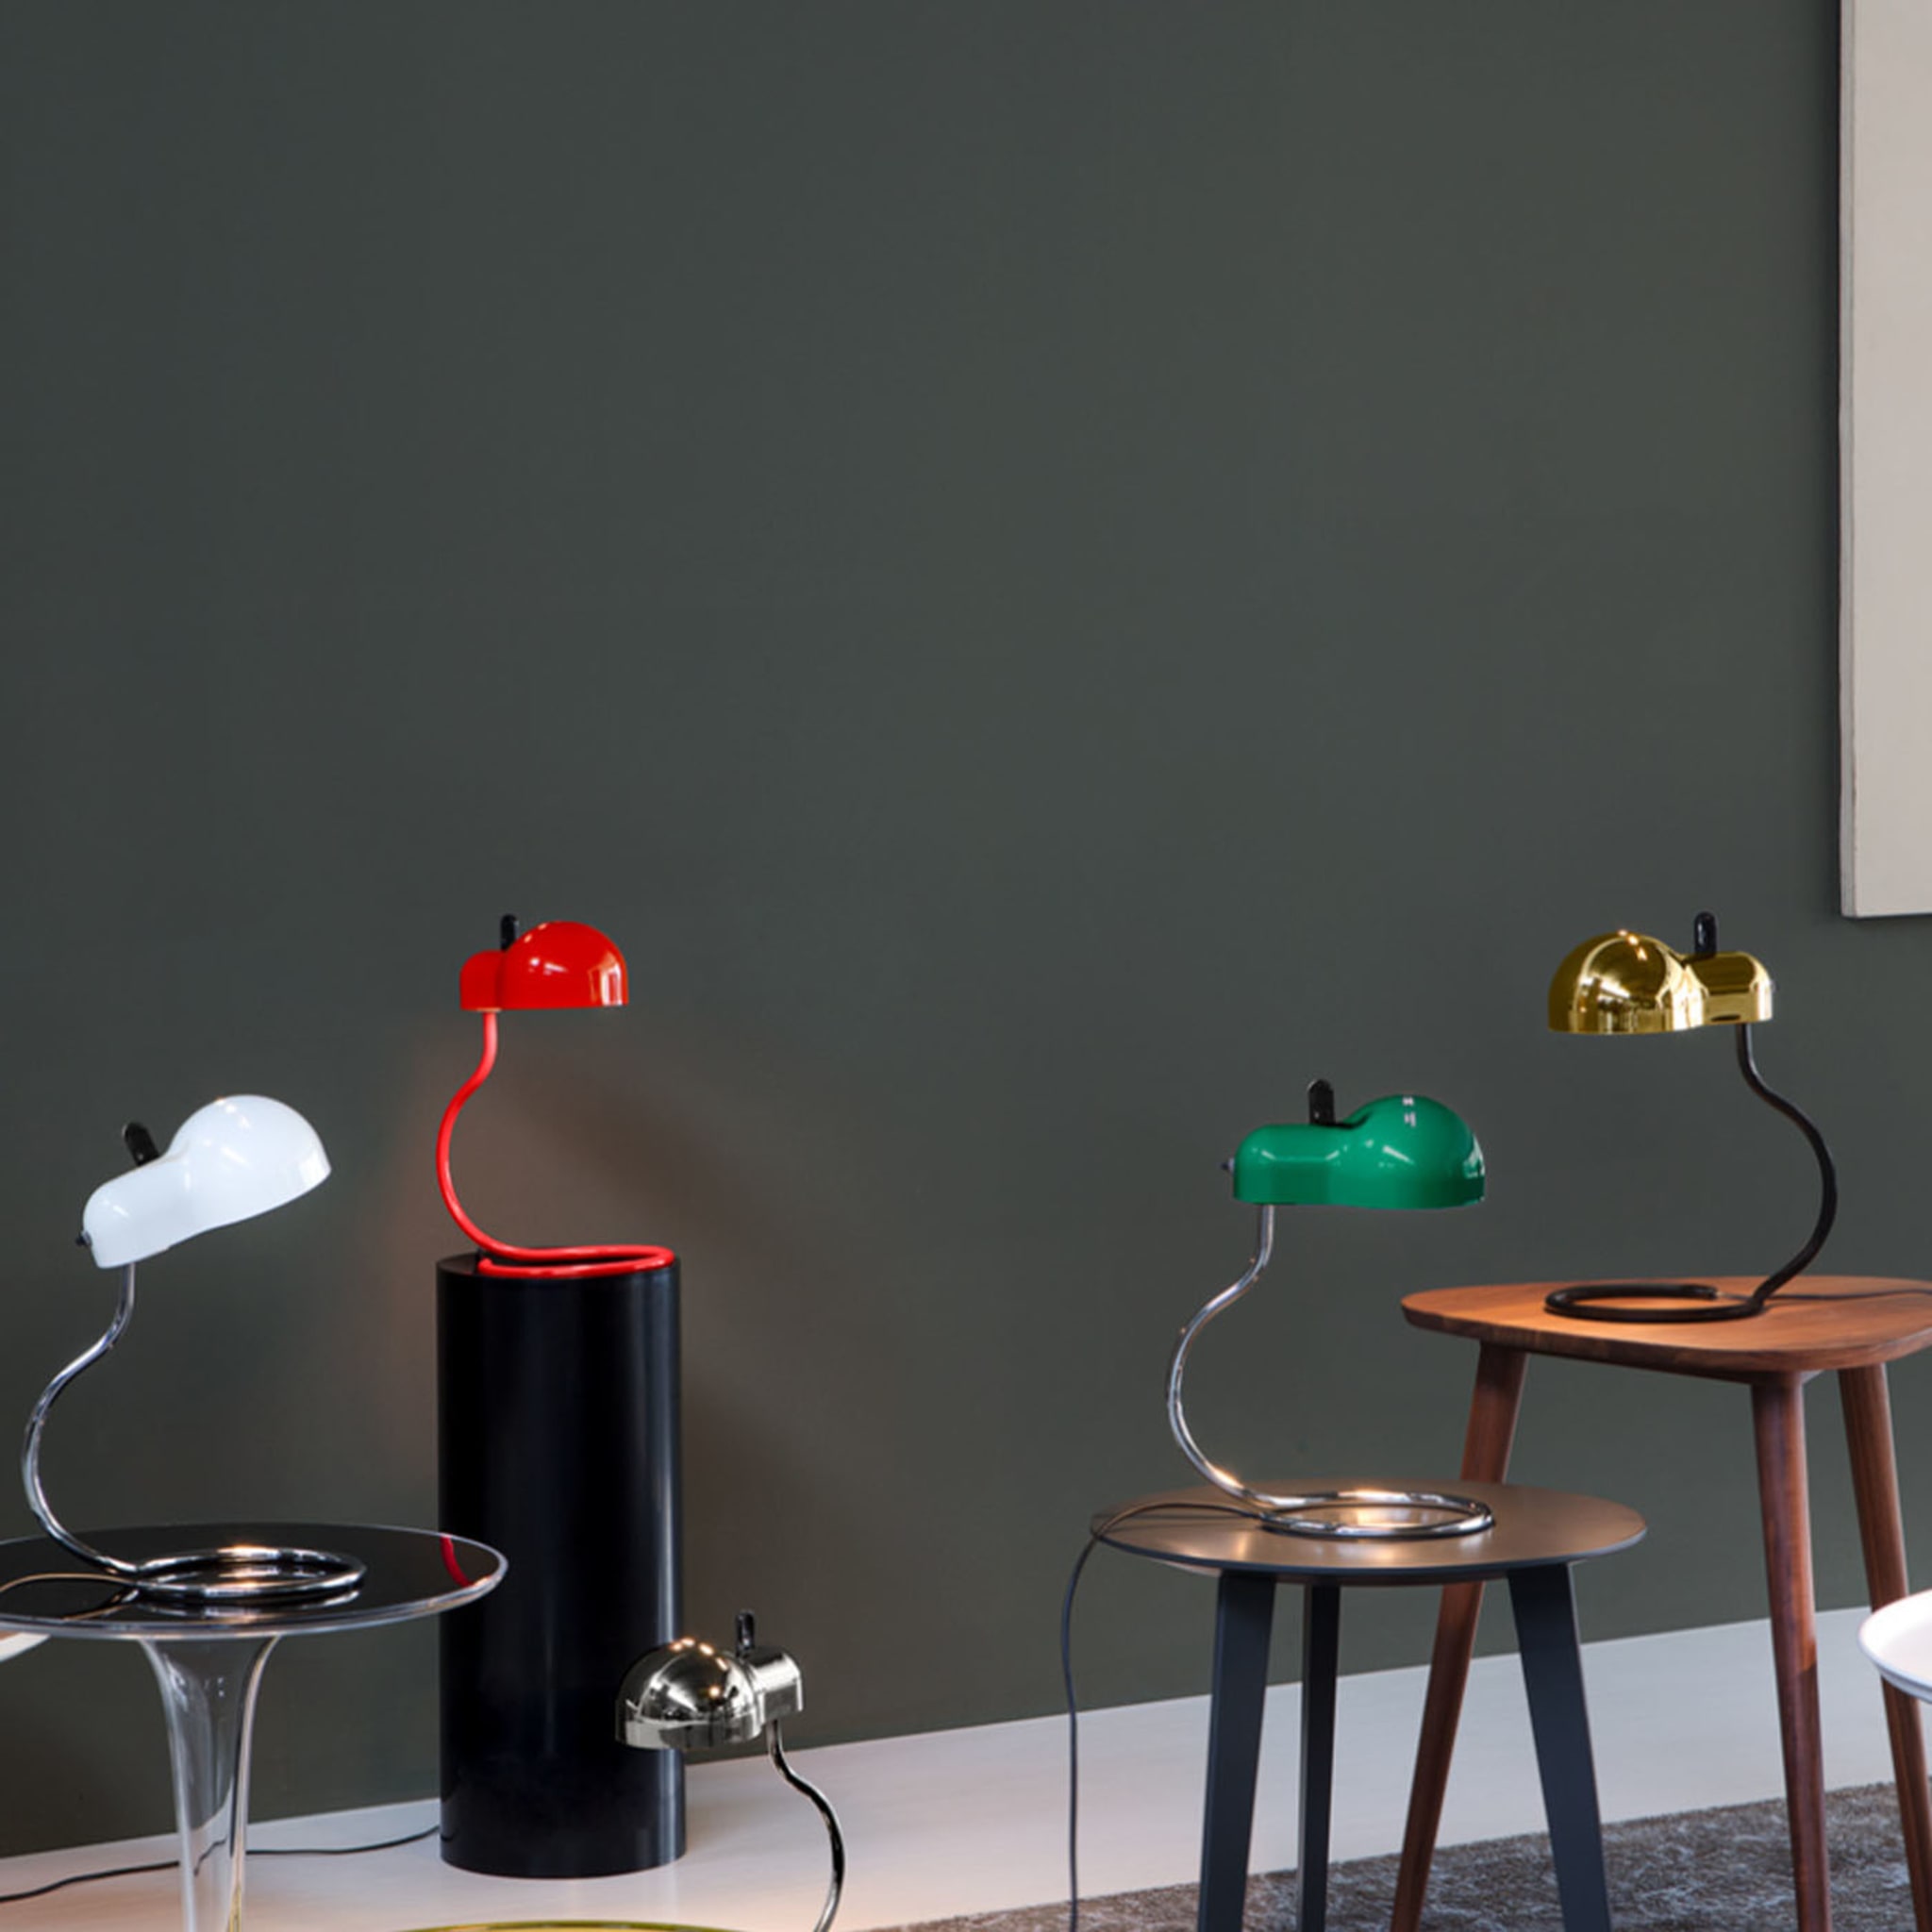 MiniTopo Chrome Table Lamp designed by Joe Colombo - Alternative view 2